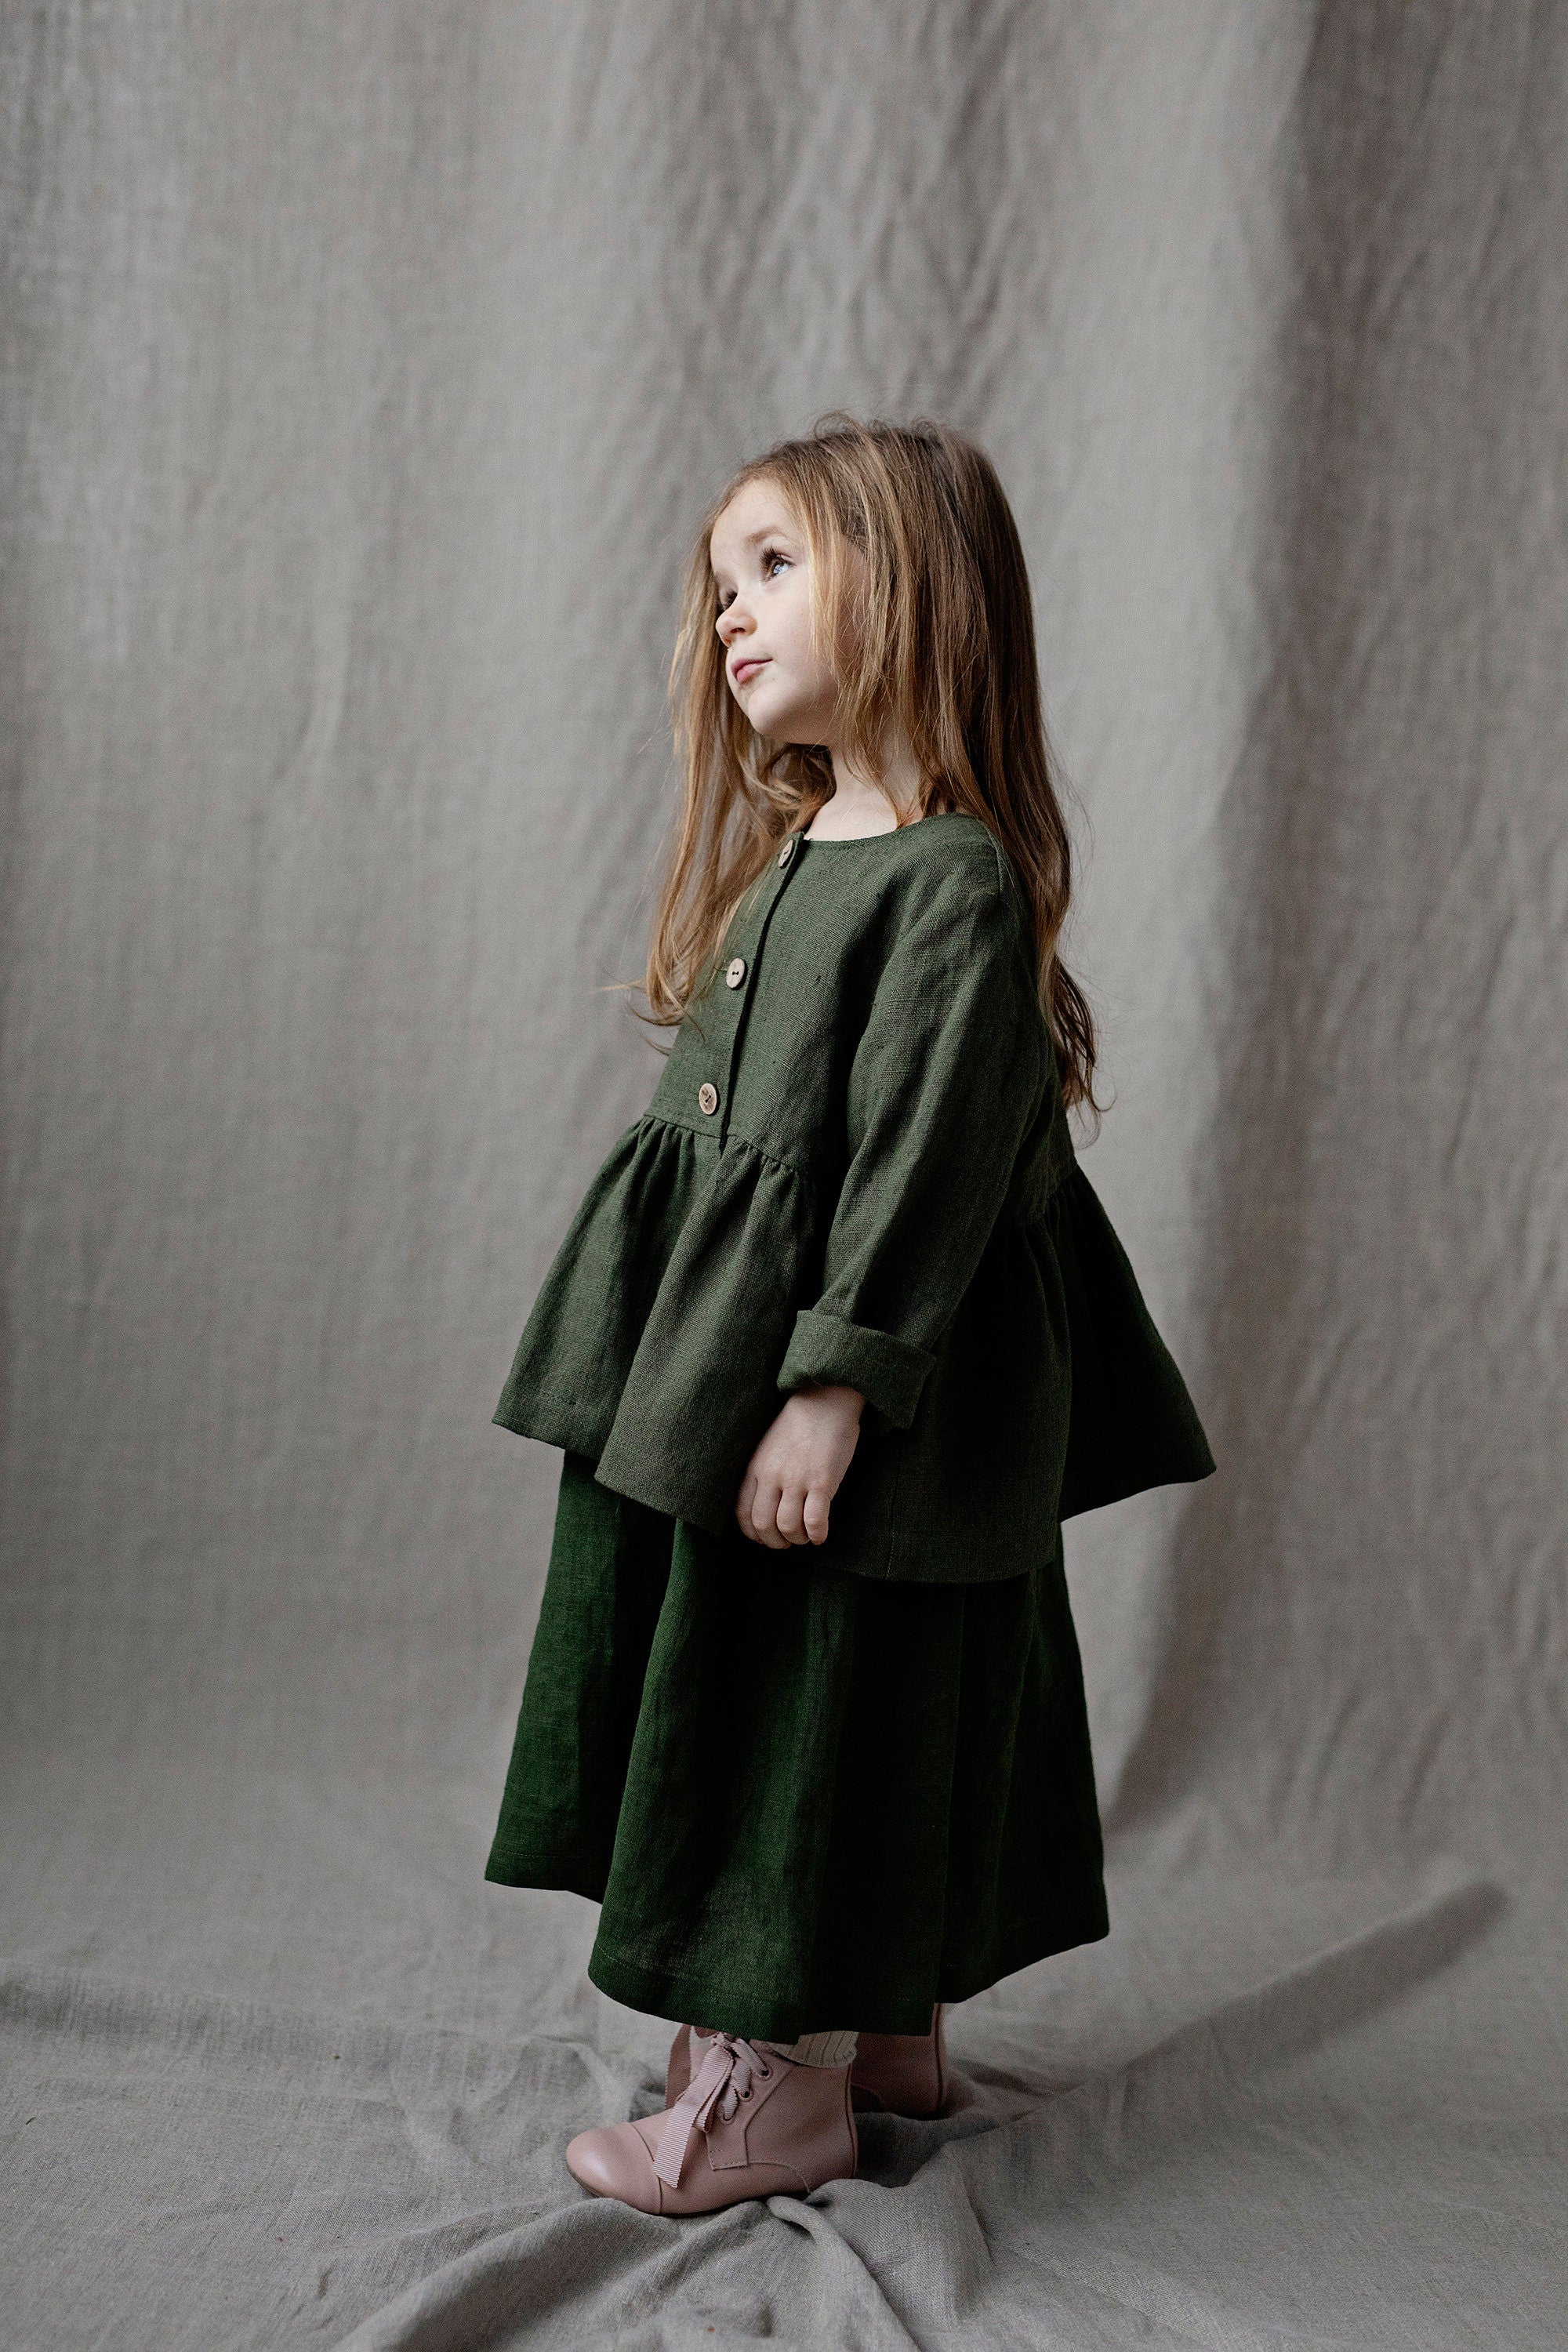 Moss Green Ruffle Linen Jacket, Size 7-8 years